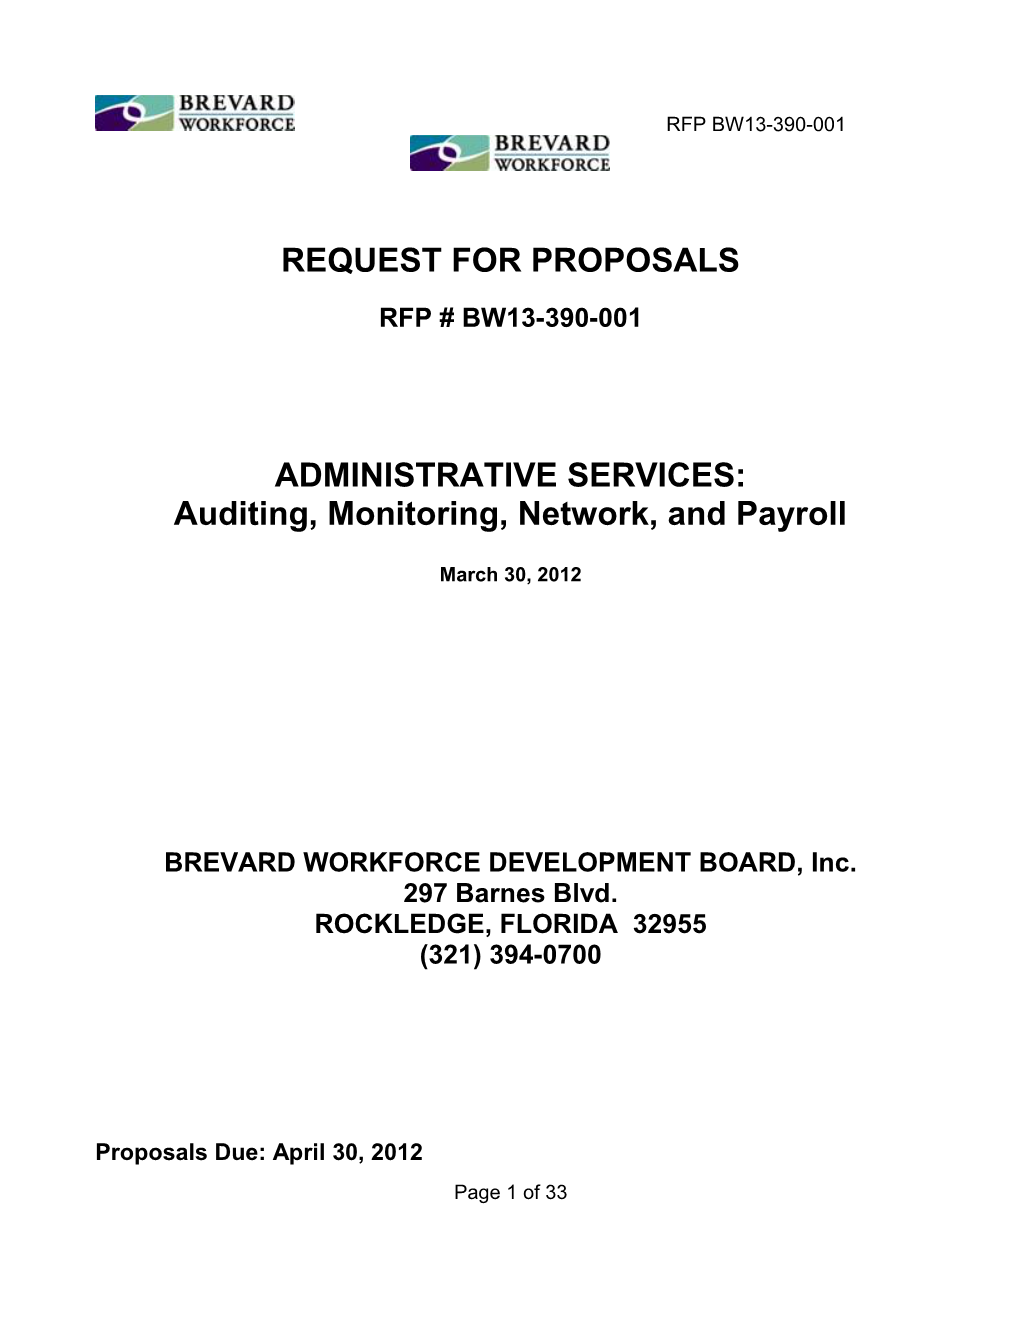 Brevard Workforce Development Board